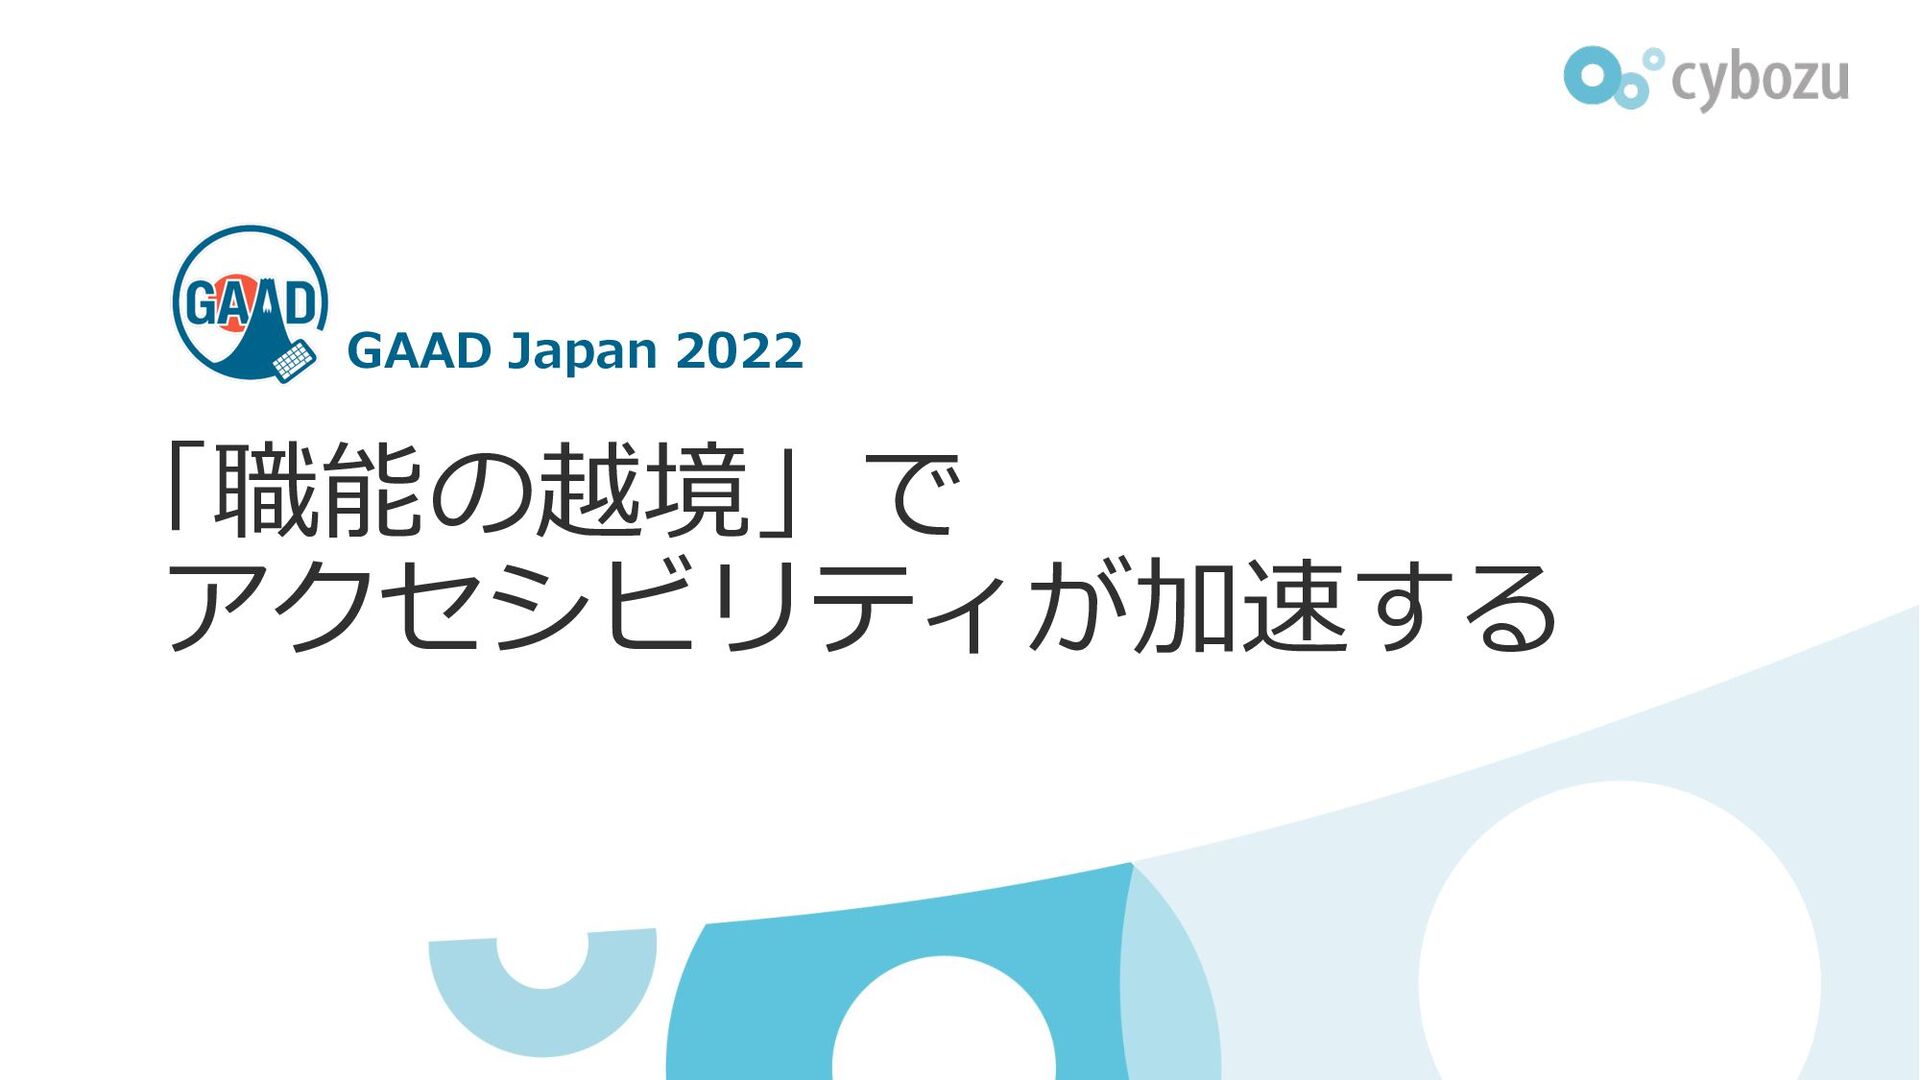 Slide Top: 「職能の越境」でアクセシビリティが加速する / GAAD Japan 2022 Crossing the border